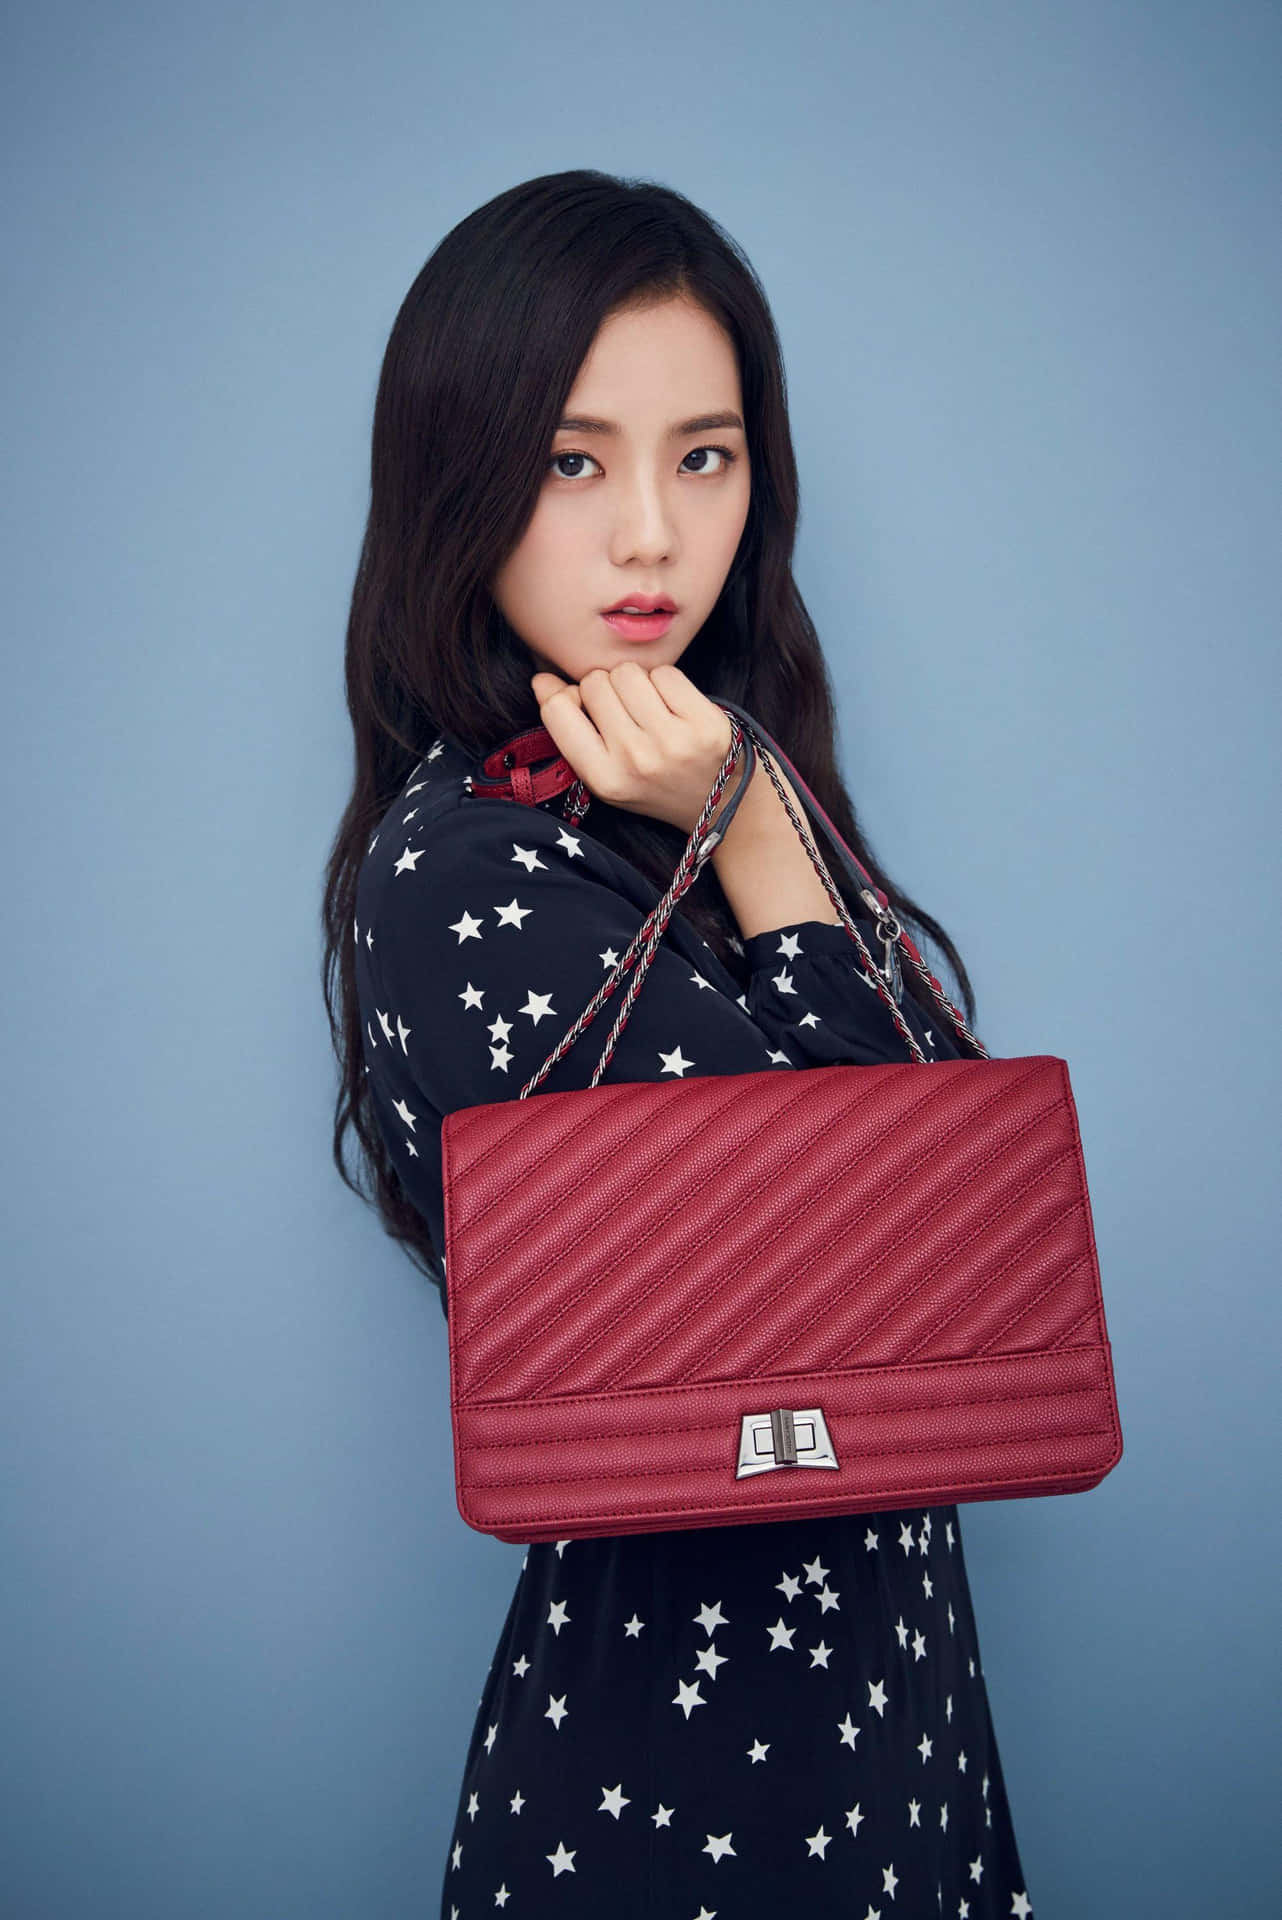 Jisoo Blackpink Red Bag Model